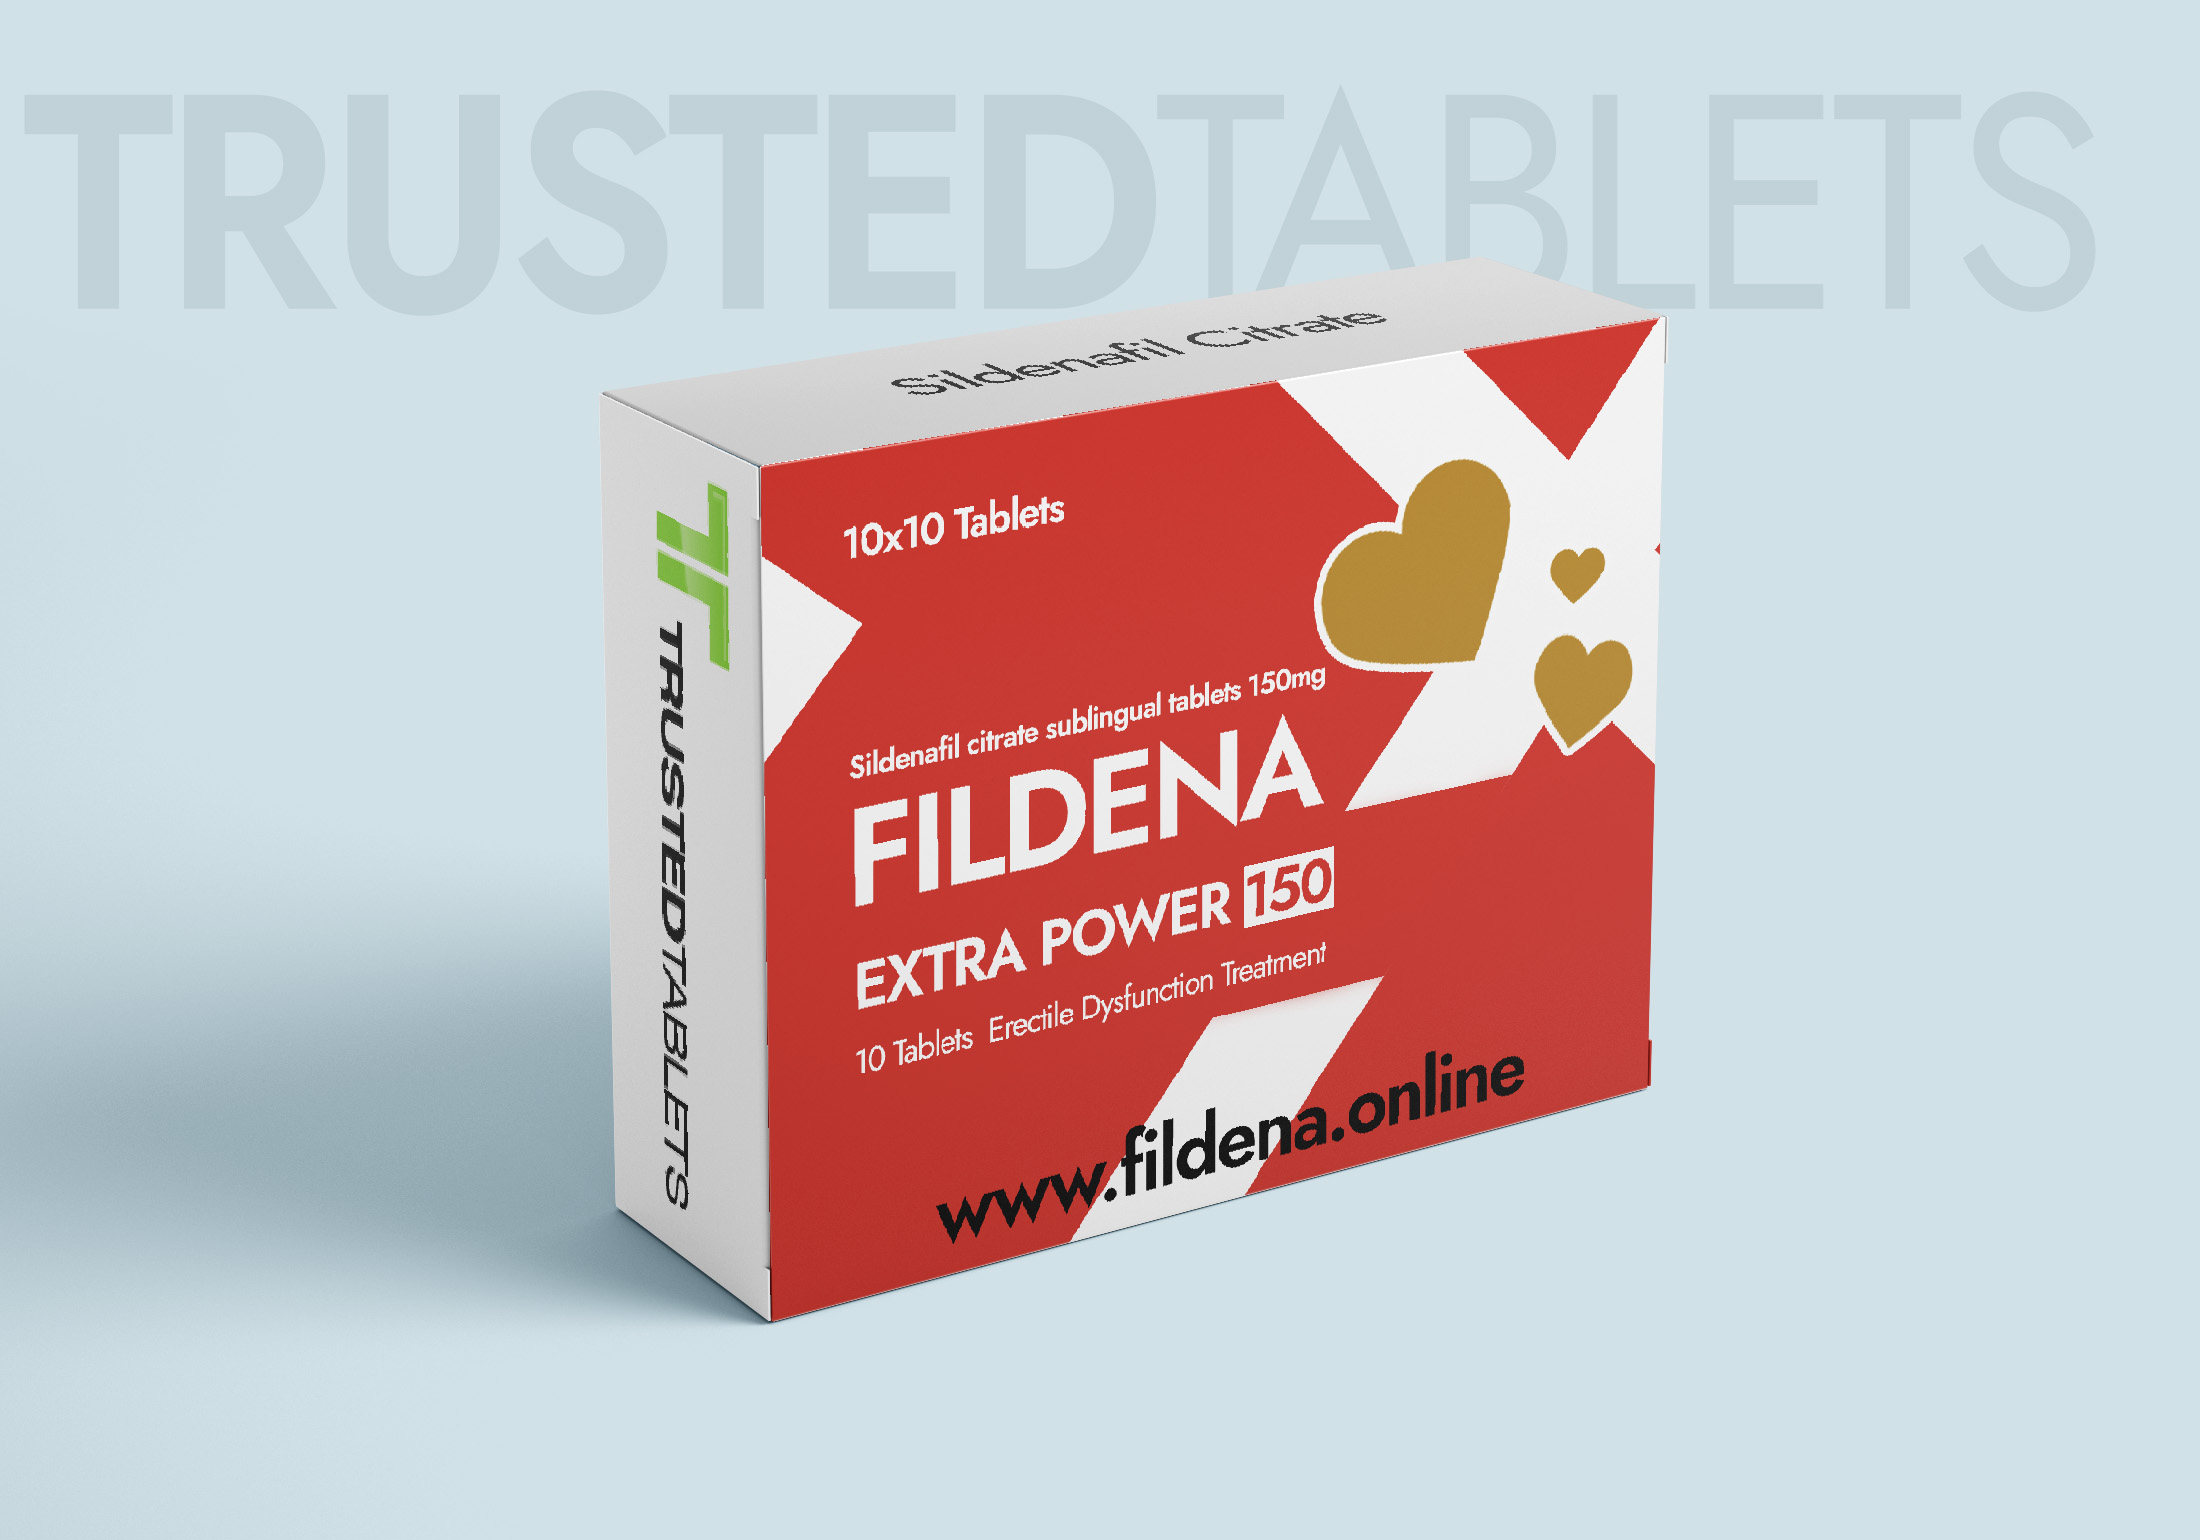 Fildena Extra Power TrustedTablets